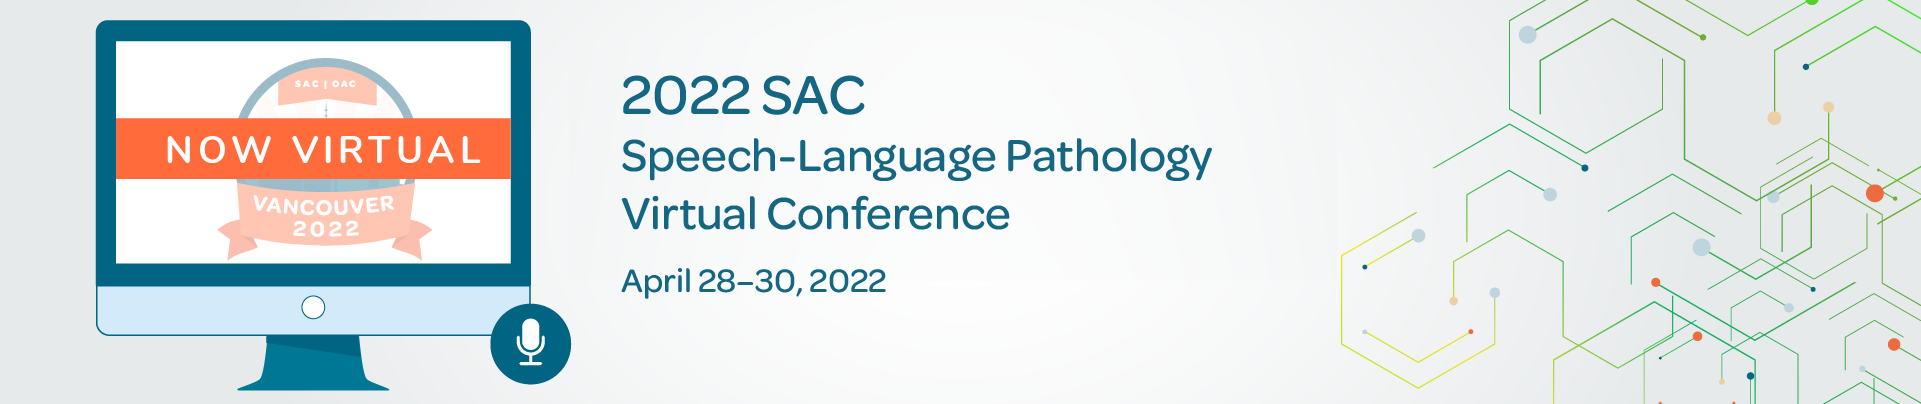 2022 SAC Speech-Language Pathology Conference